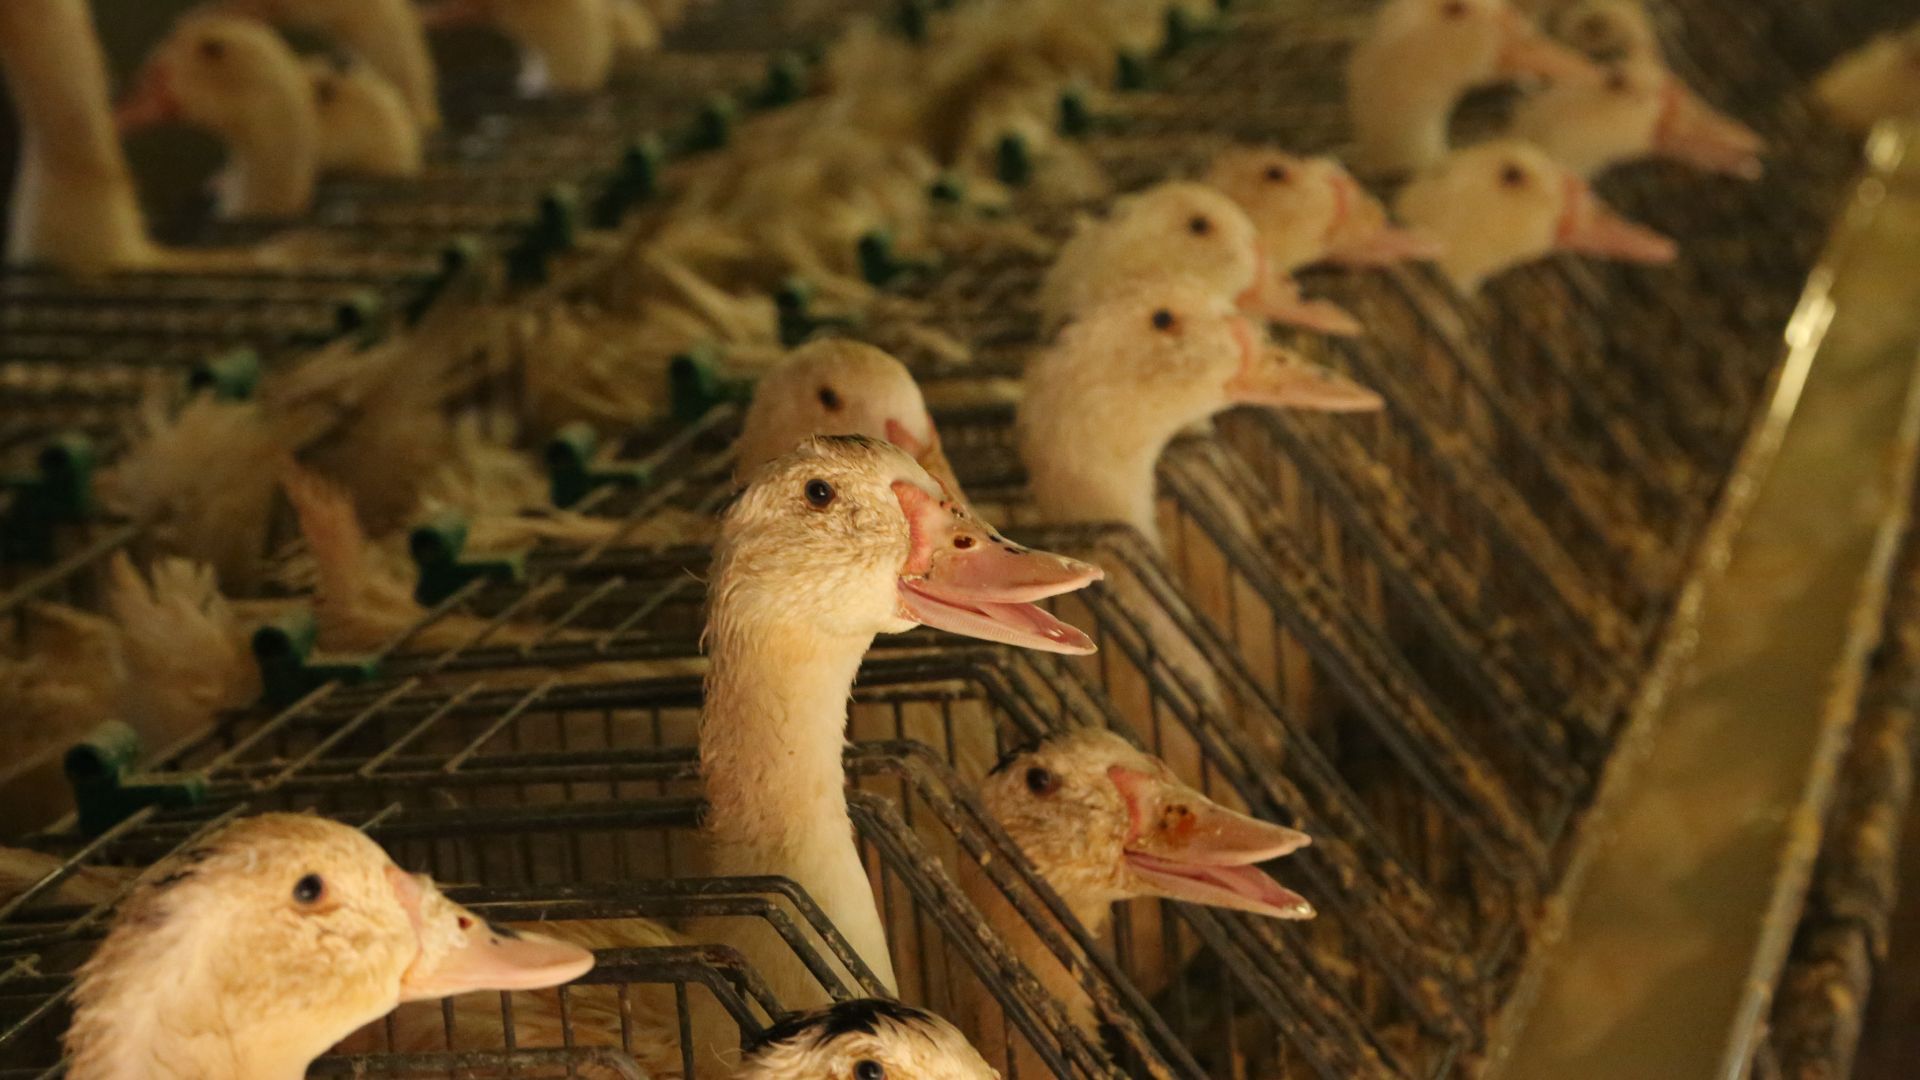 ducks in cages foie gras